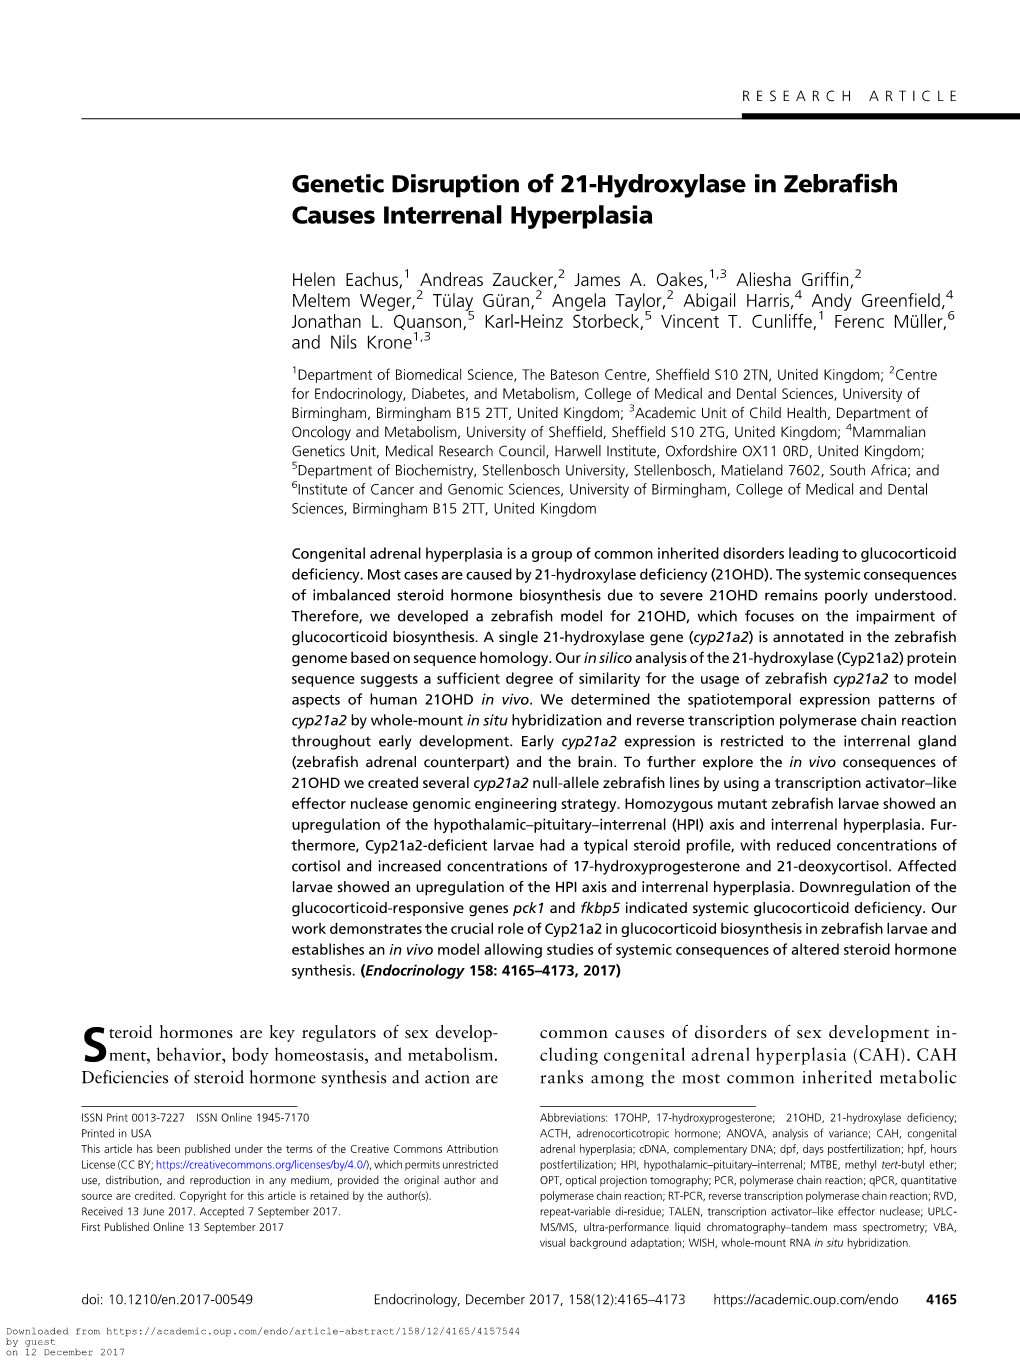 Genetic Disruption of 21-Hydroxylase in Zebrafish Causes Interrenal Hyperplasia